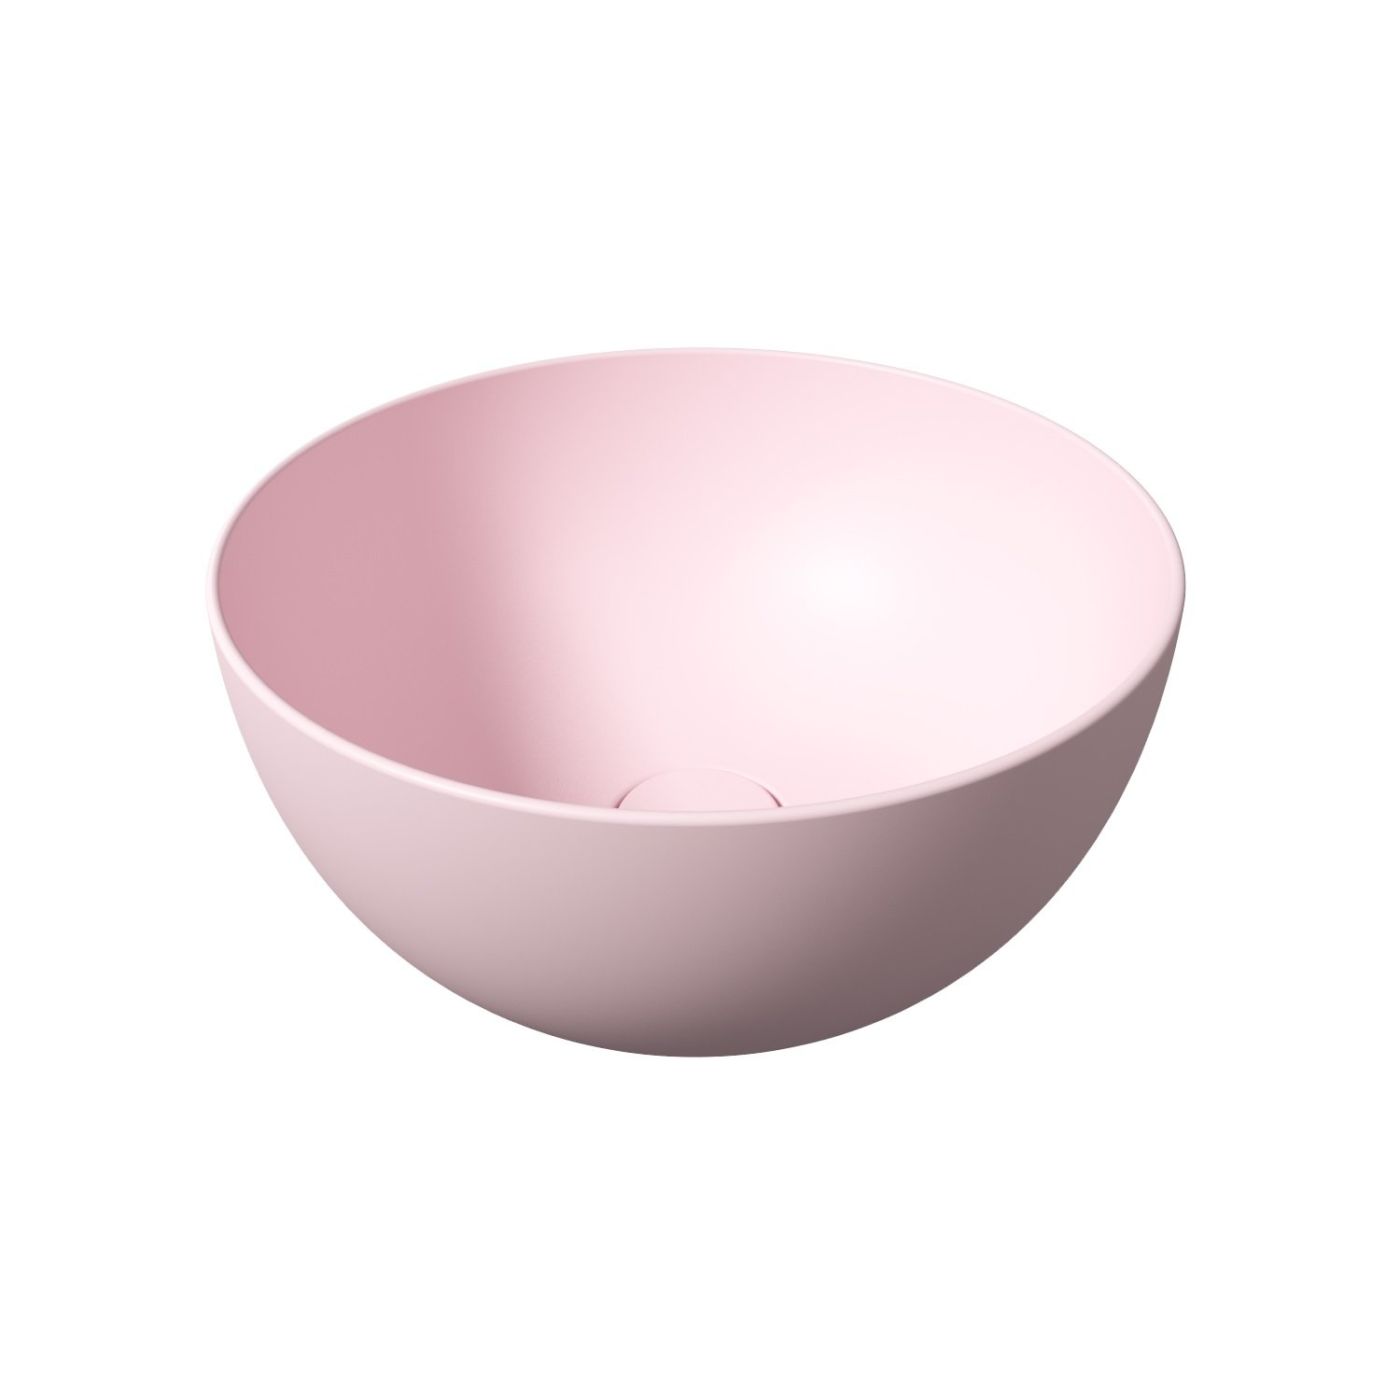 Salenzi Unica ronde waskom opbouw 40x20 cm mat roze (inclusief bijpassende clickwaste)